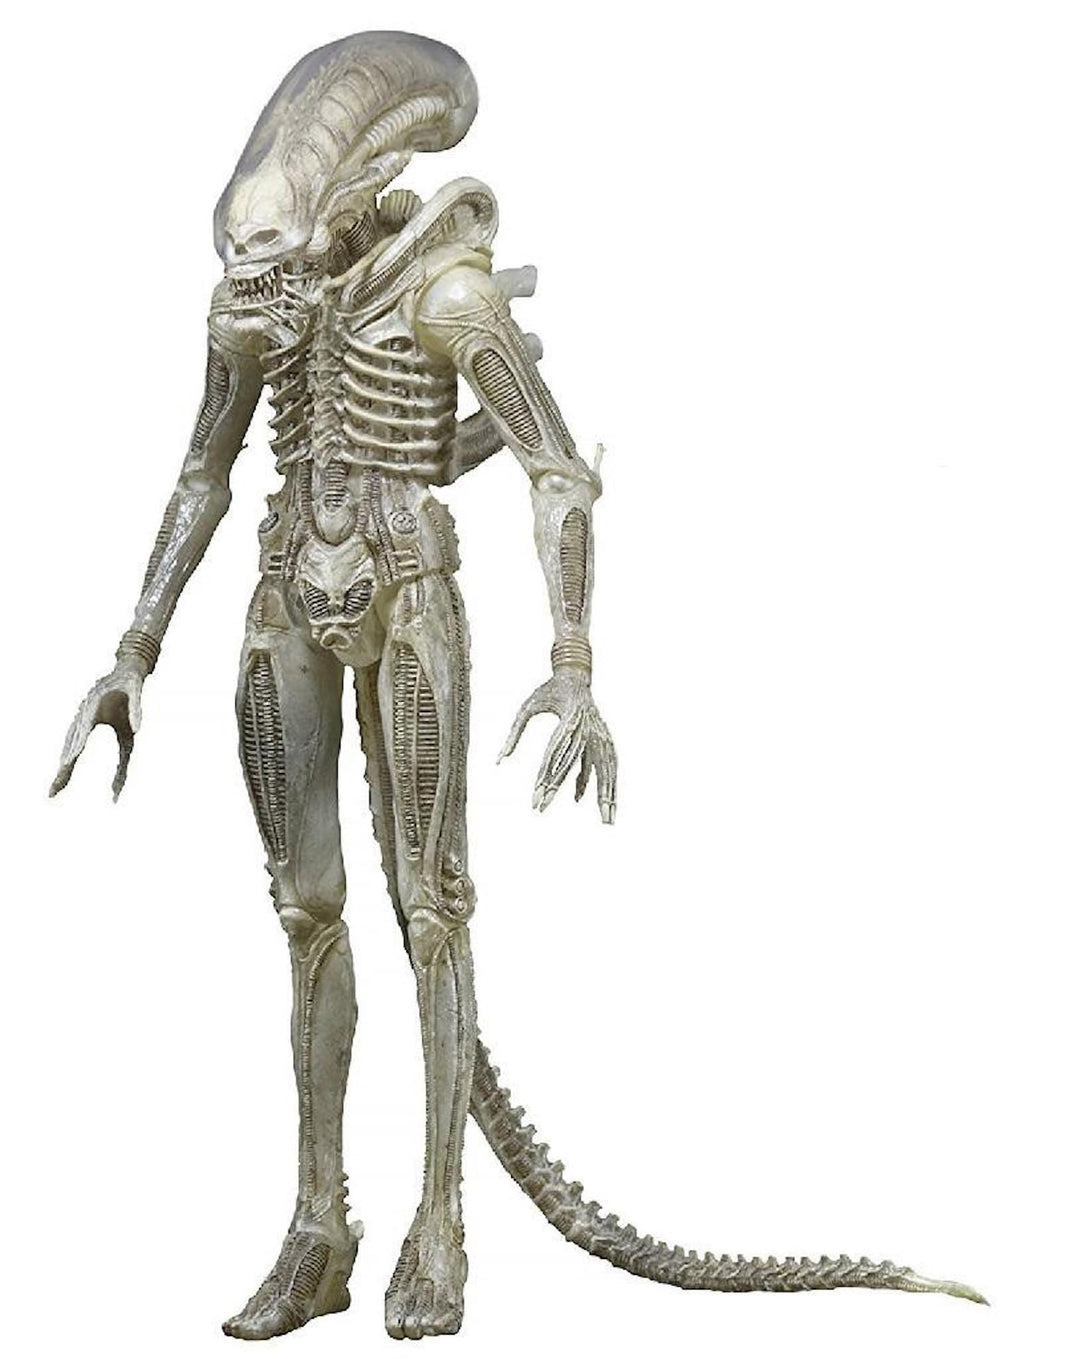 NECA Alien 40th Anniversary The Alien (Prototype Suit) 7" Scale Action Figure